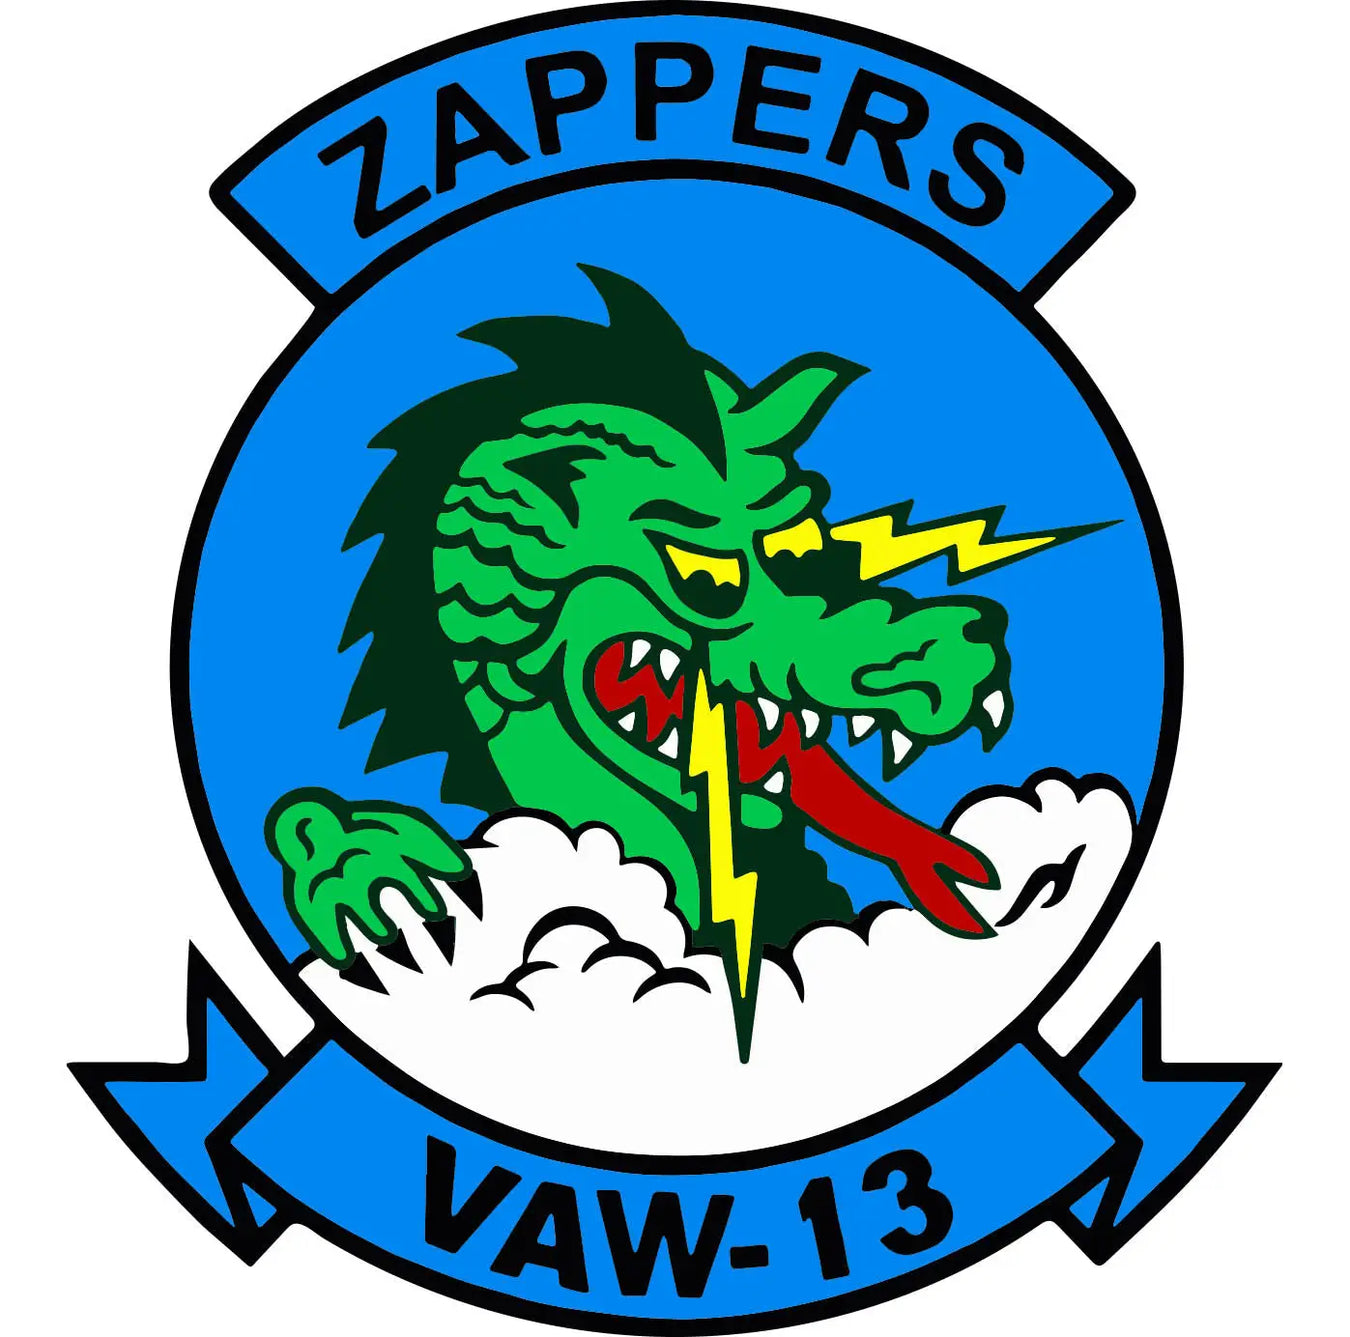 Airborne Command & Control Squadron 13 (VAW-13)